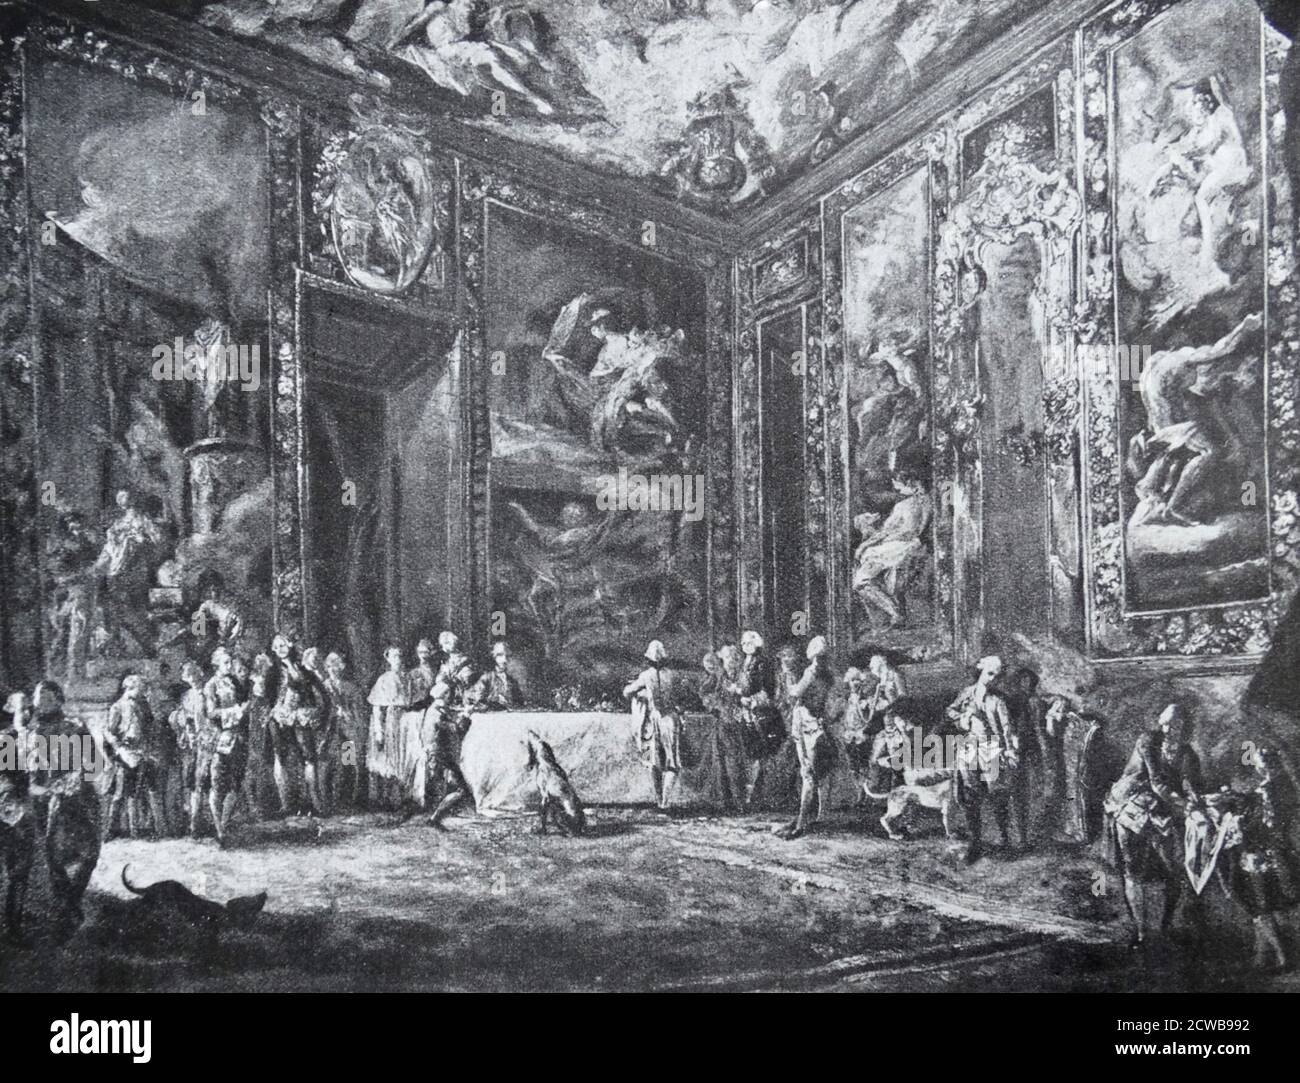 Peinture intitulée "Carlos III manger devant la cour" par Luis Paret y Alcazar. Luis Paret y Alcazar (1746-1799) peintre espagnol de la période baroque ou rococo. Banque D'Images